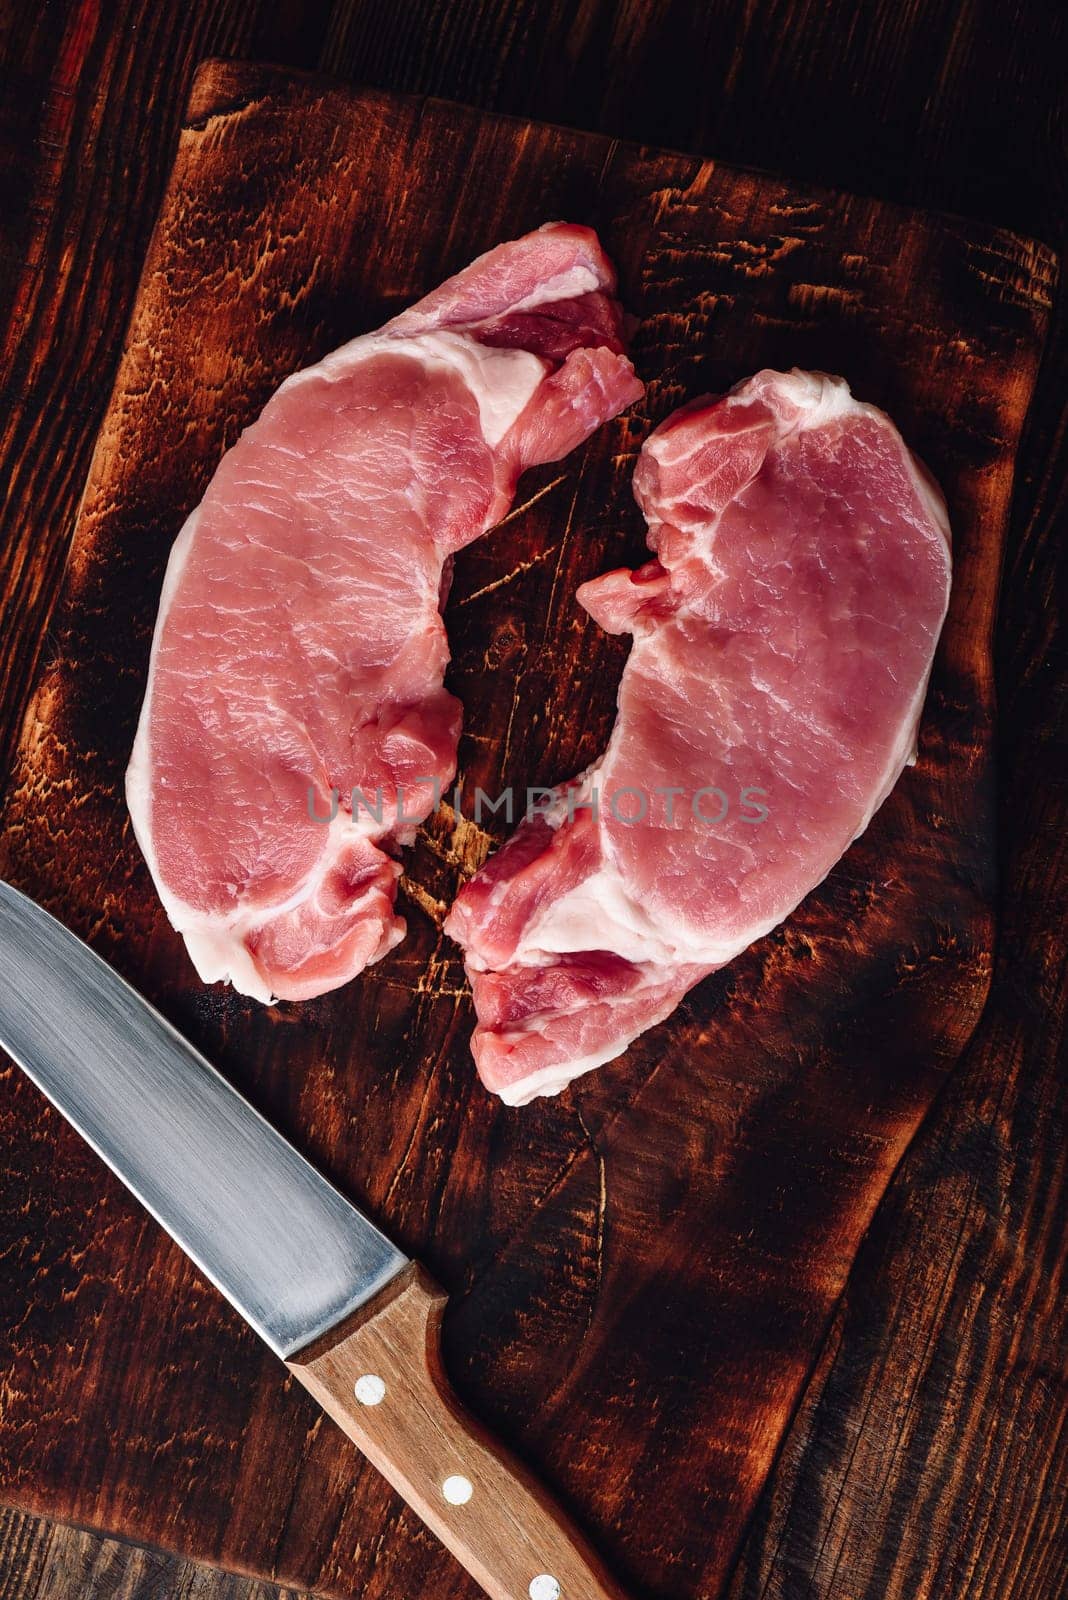 Two pork loin steaks with knife by Seva_blsv